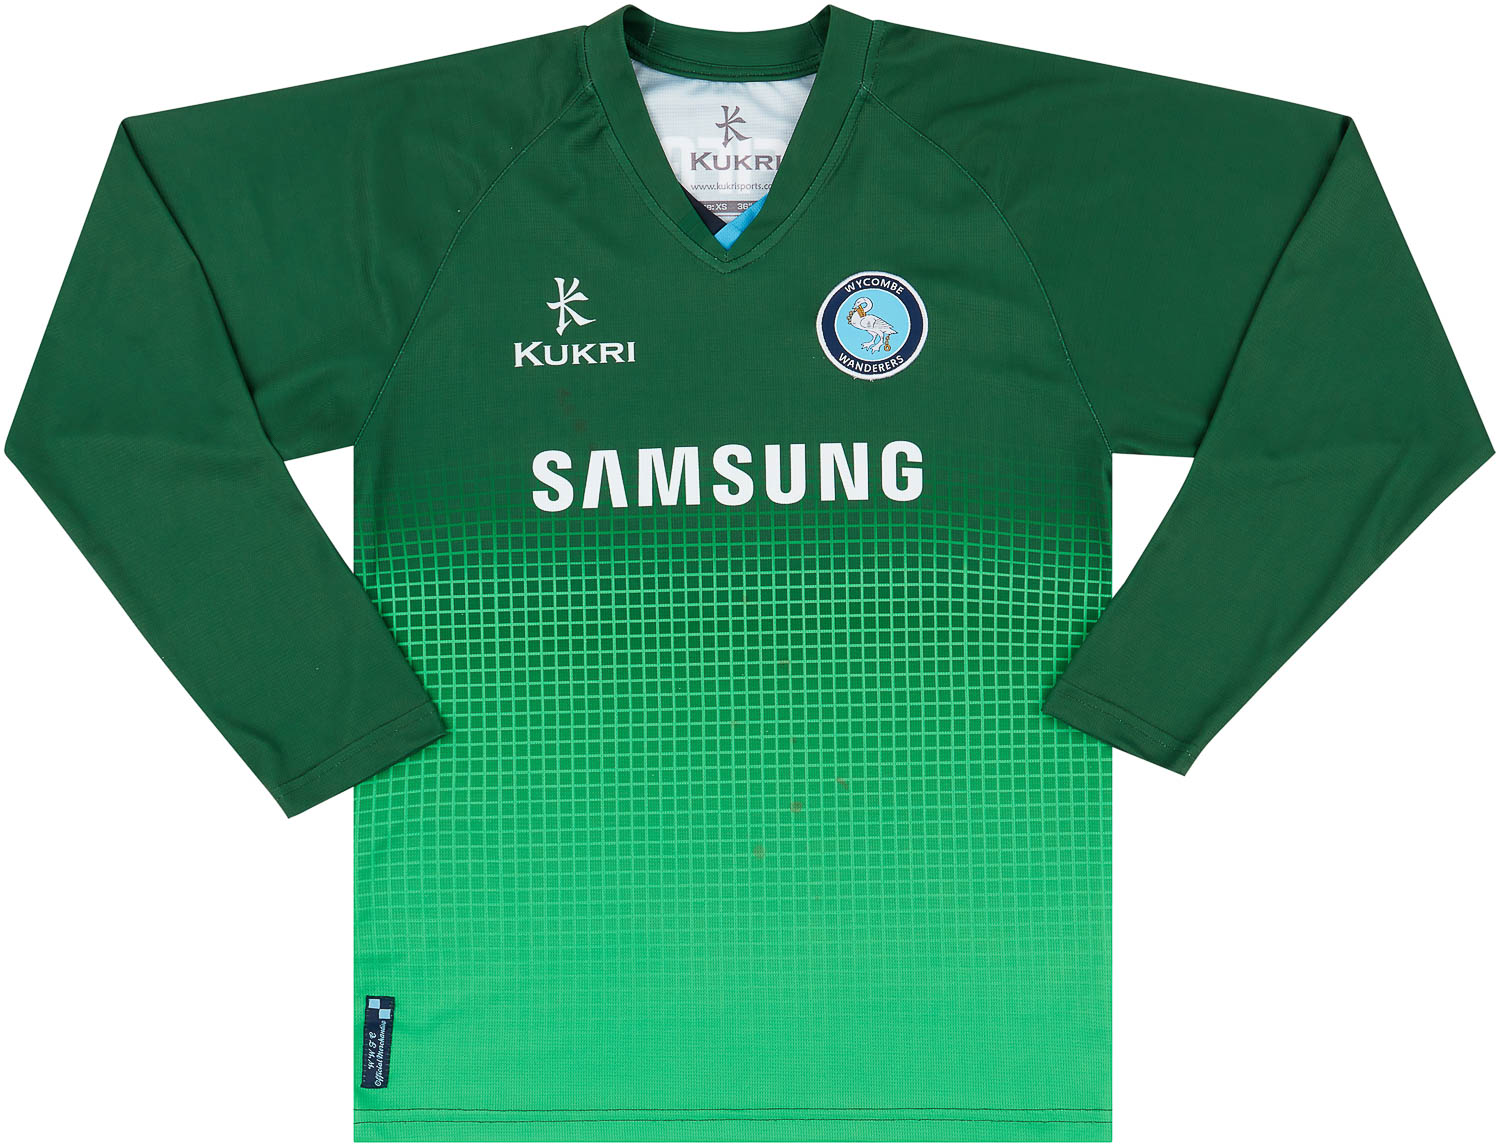 Wycombe Wanderers  Keeper  shirt  (Original)